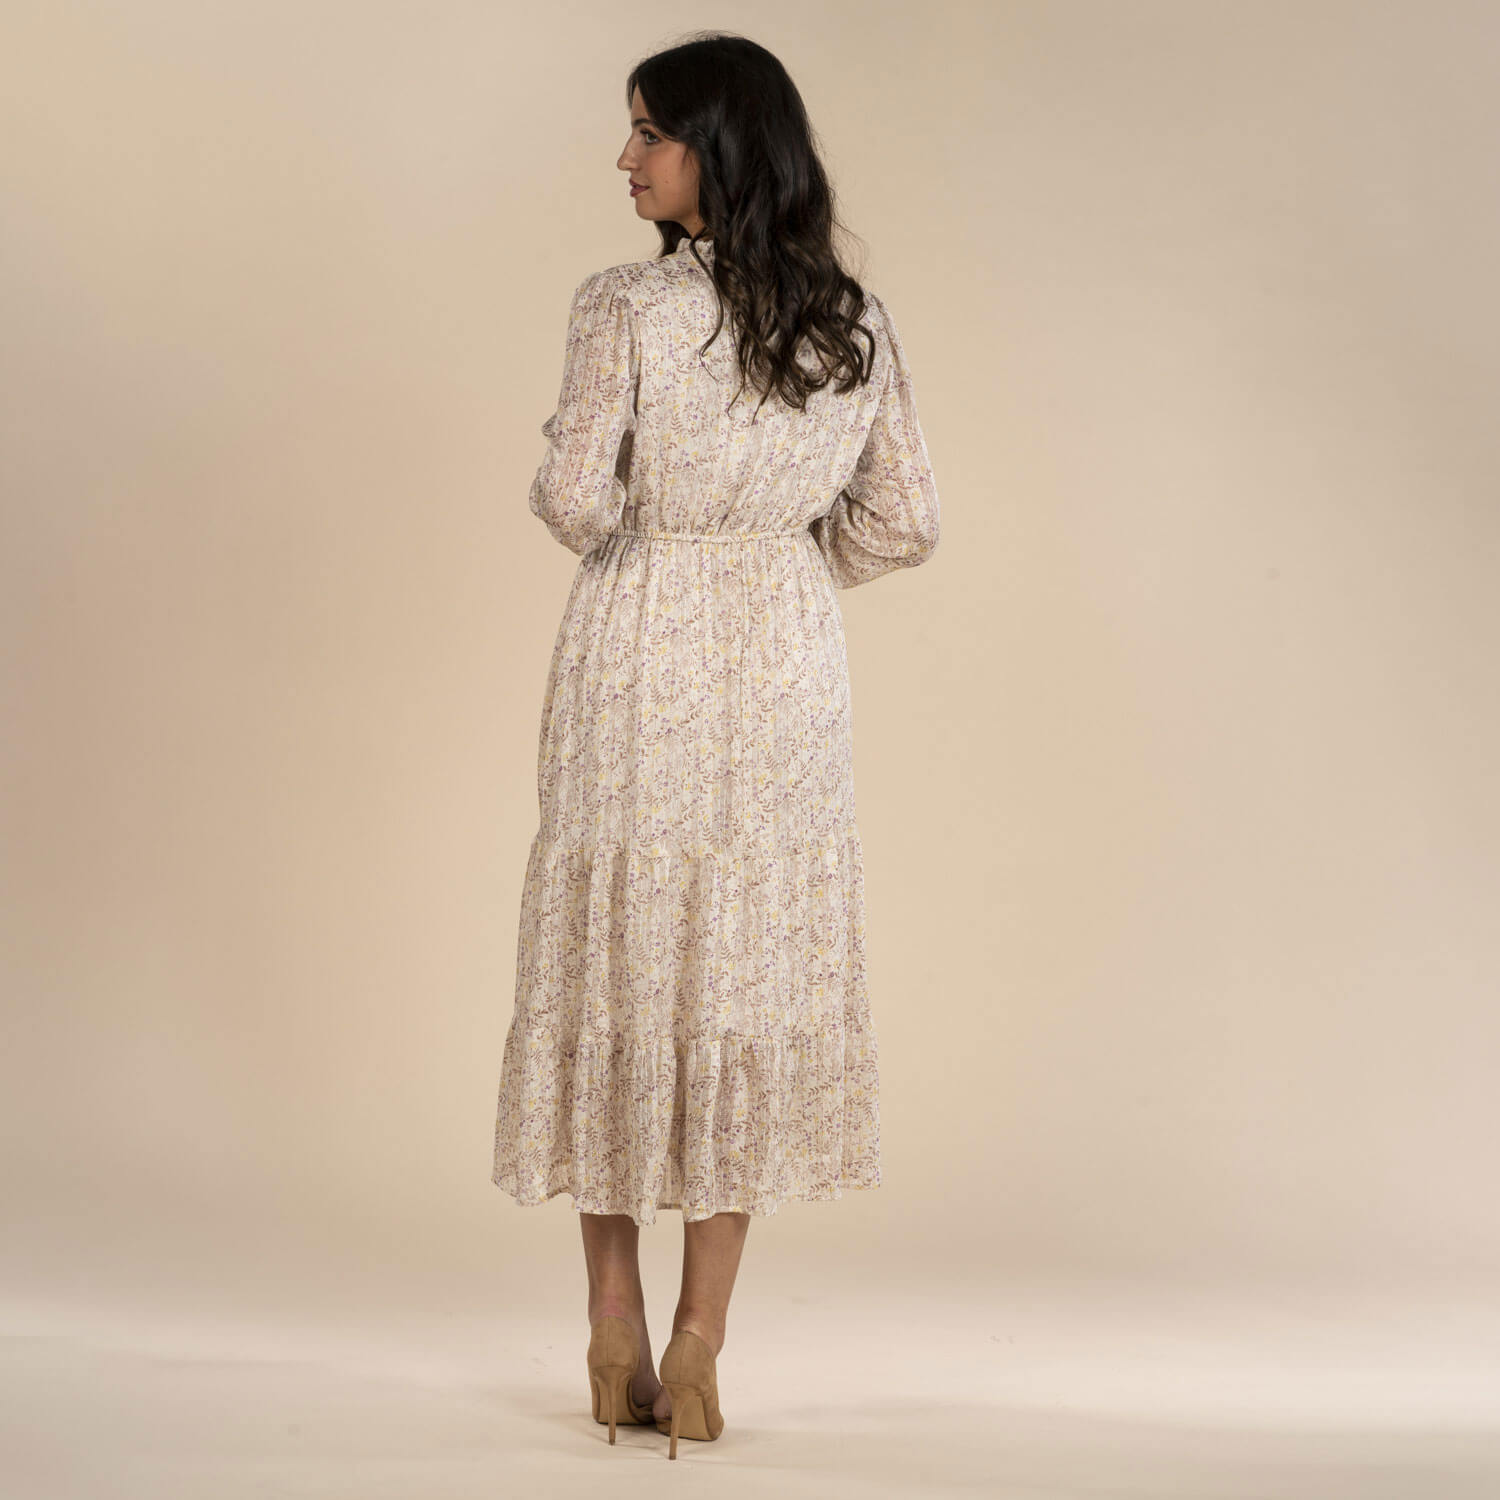 Naoise Romantic Vintage Dress - Ivory 2 Shaws Department Stores